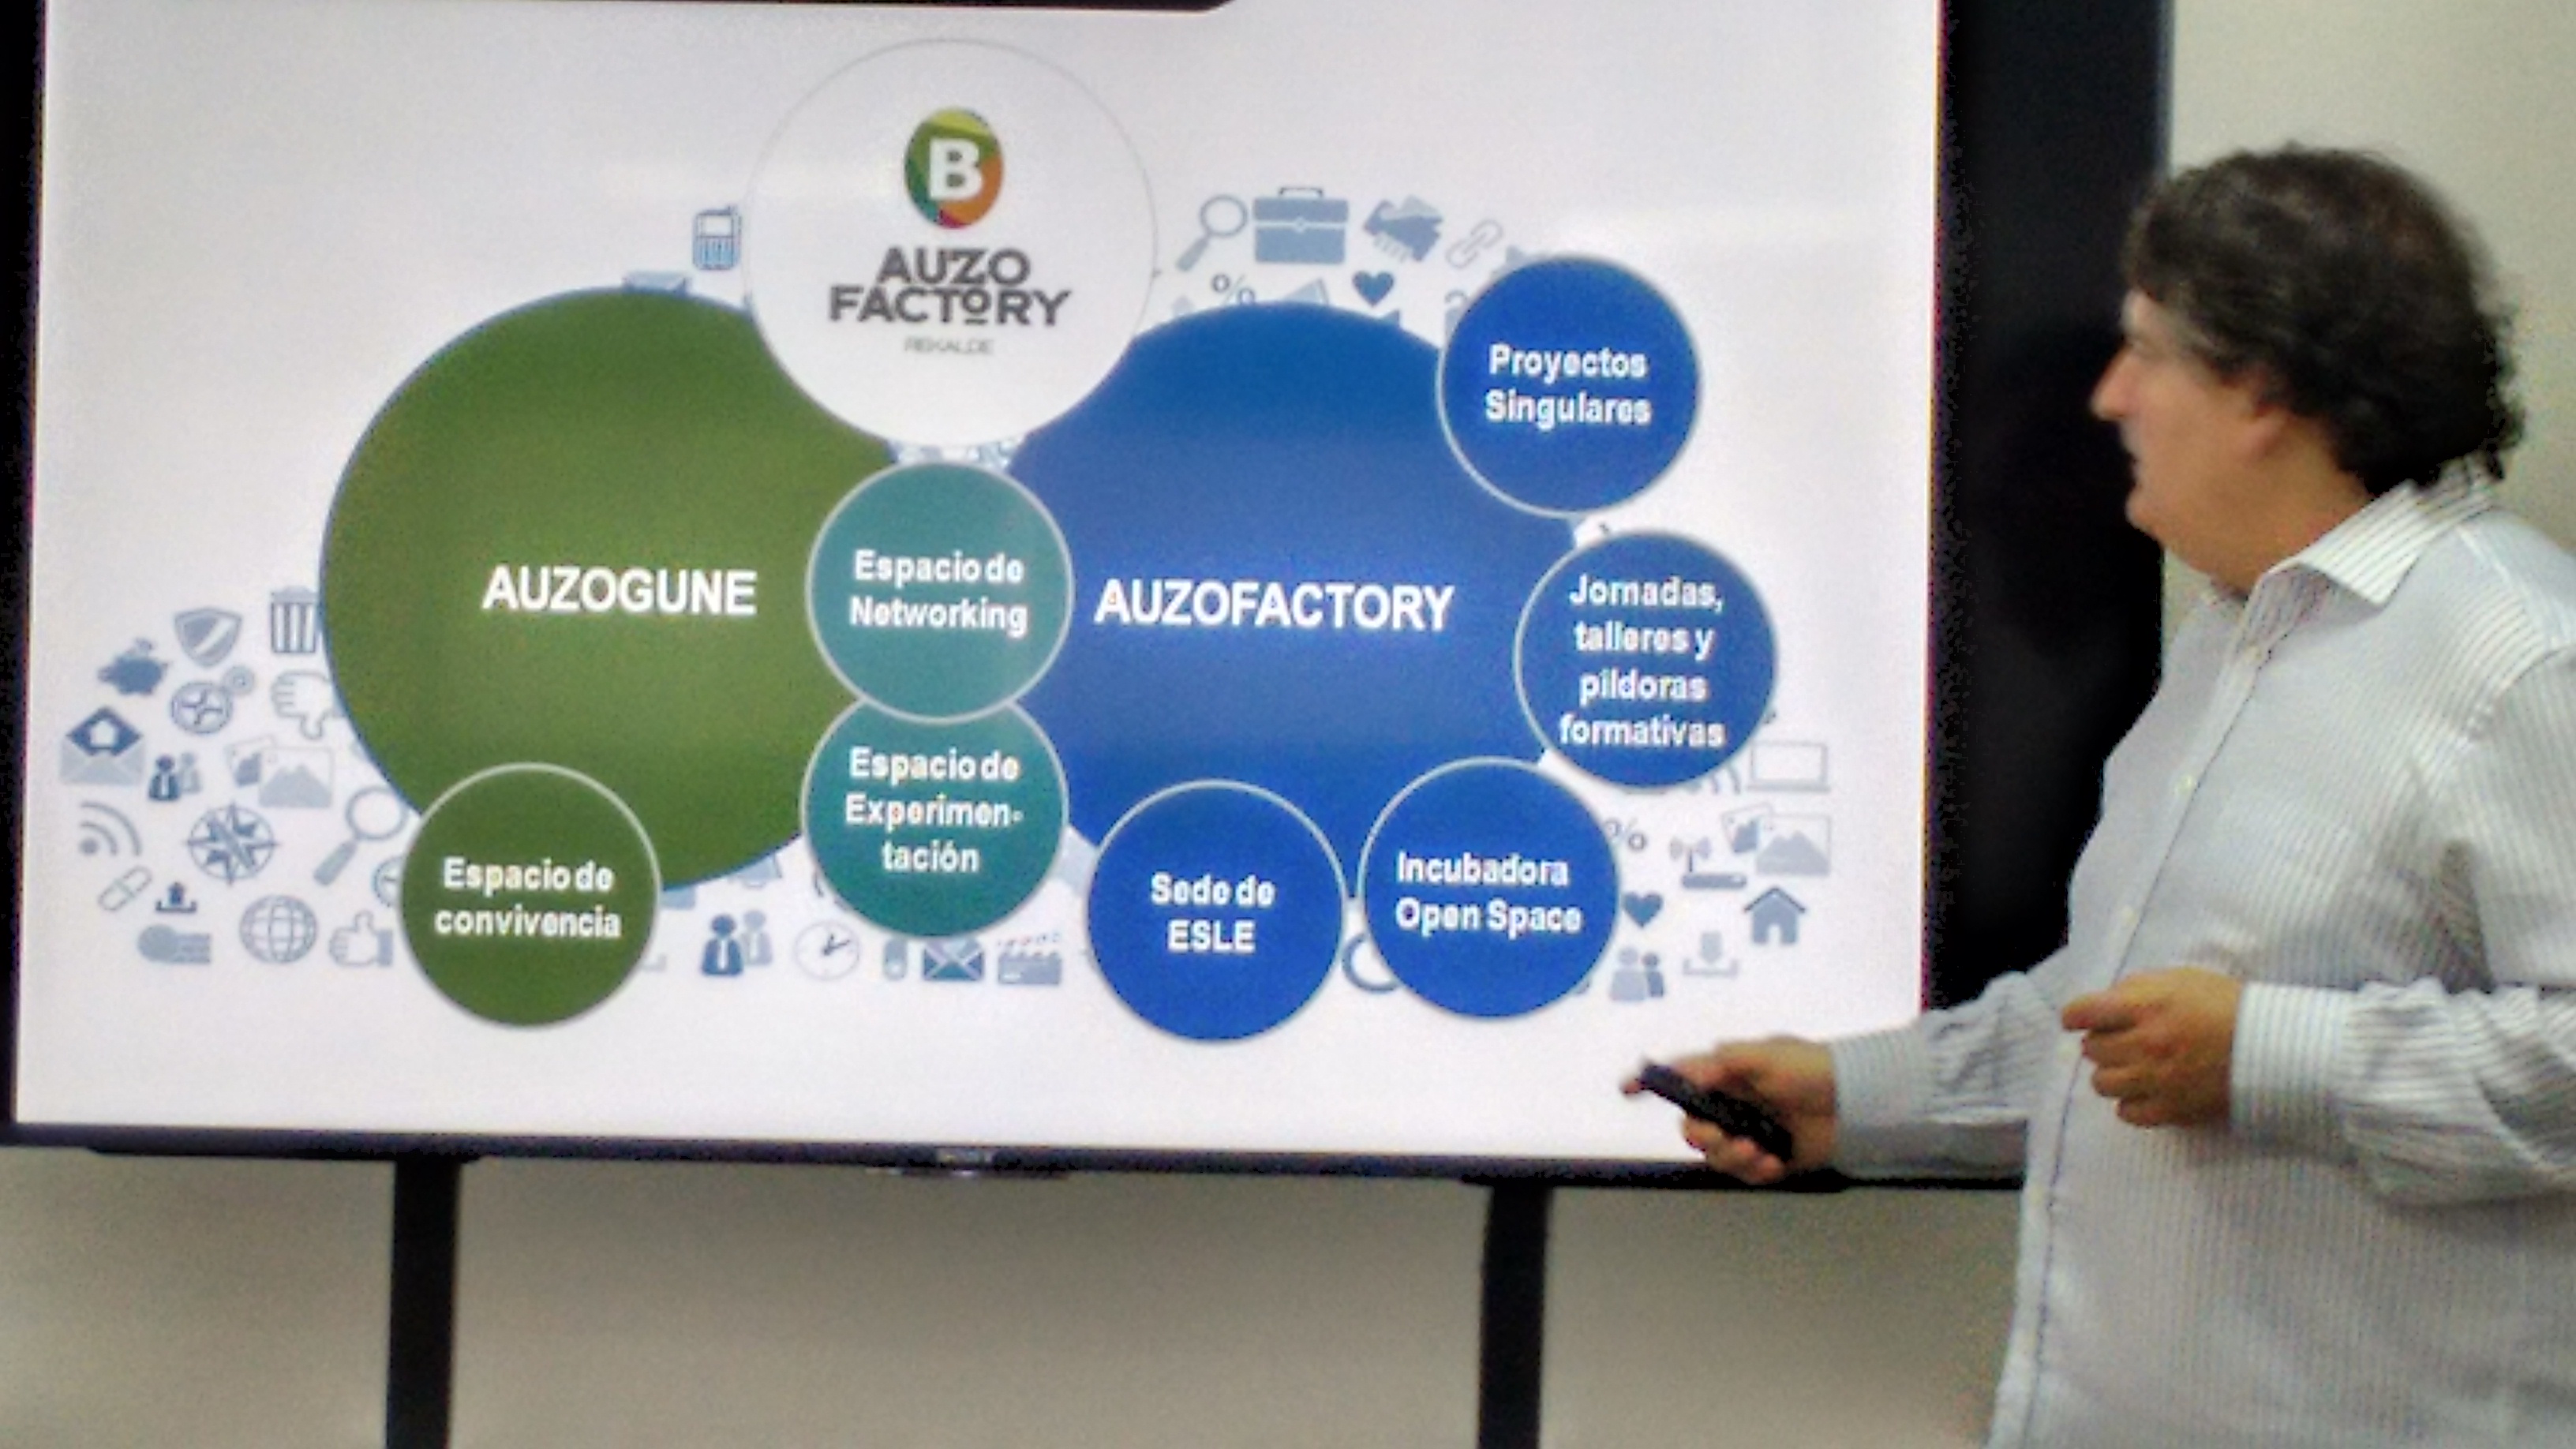 Roberto explicando la estrategia Auzo Factory